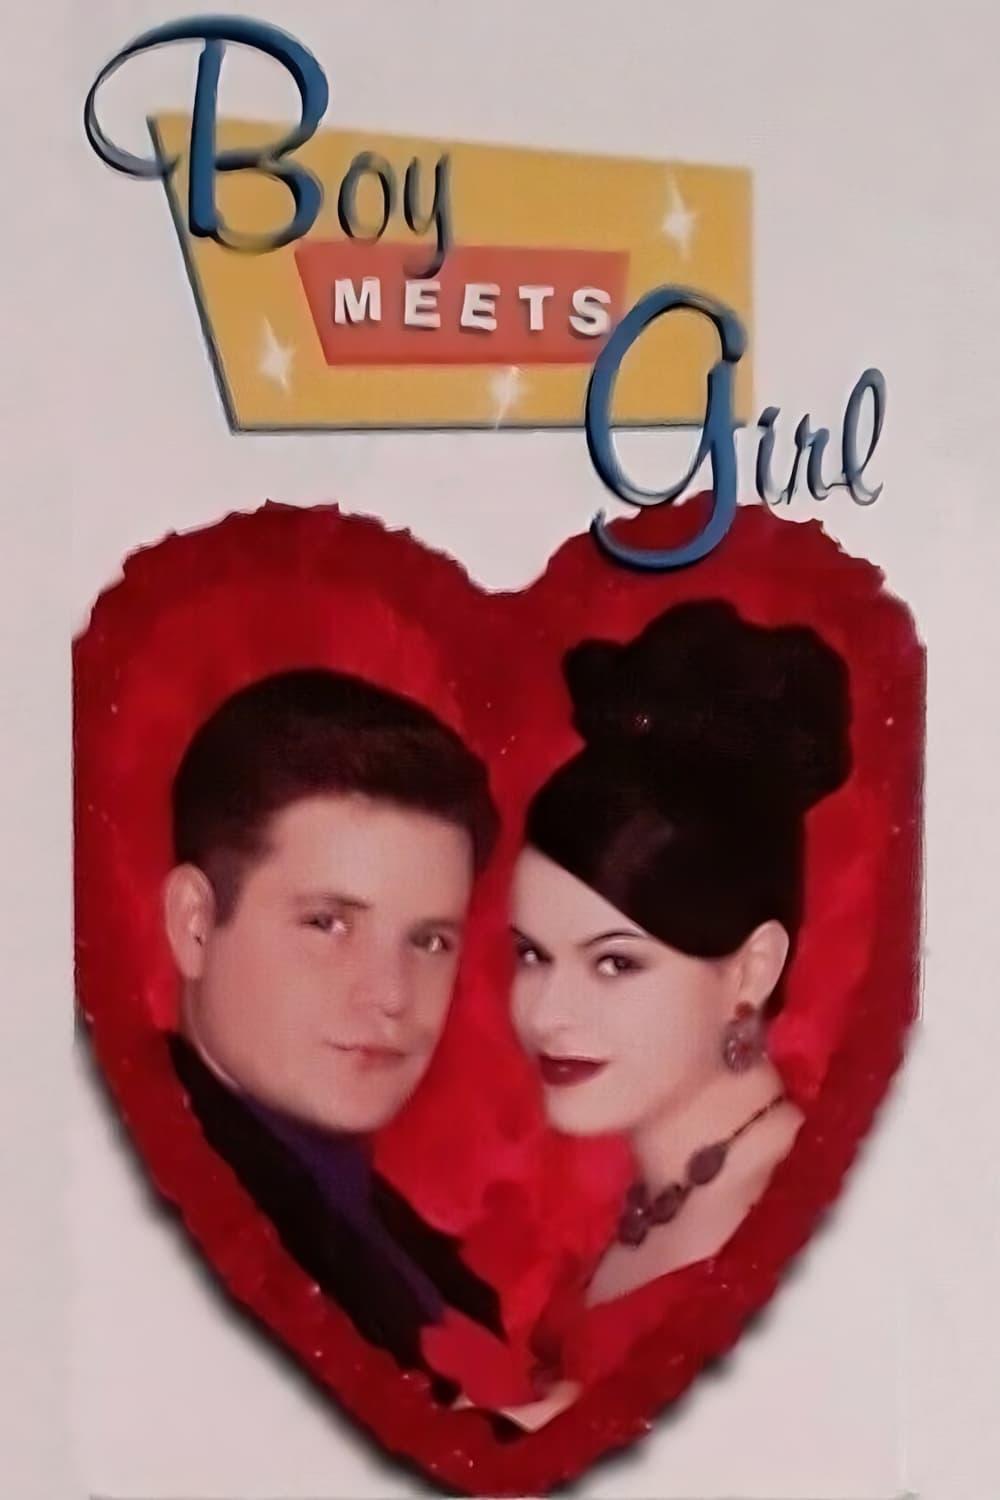 Boy Meets Girl poster